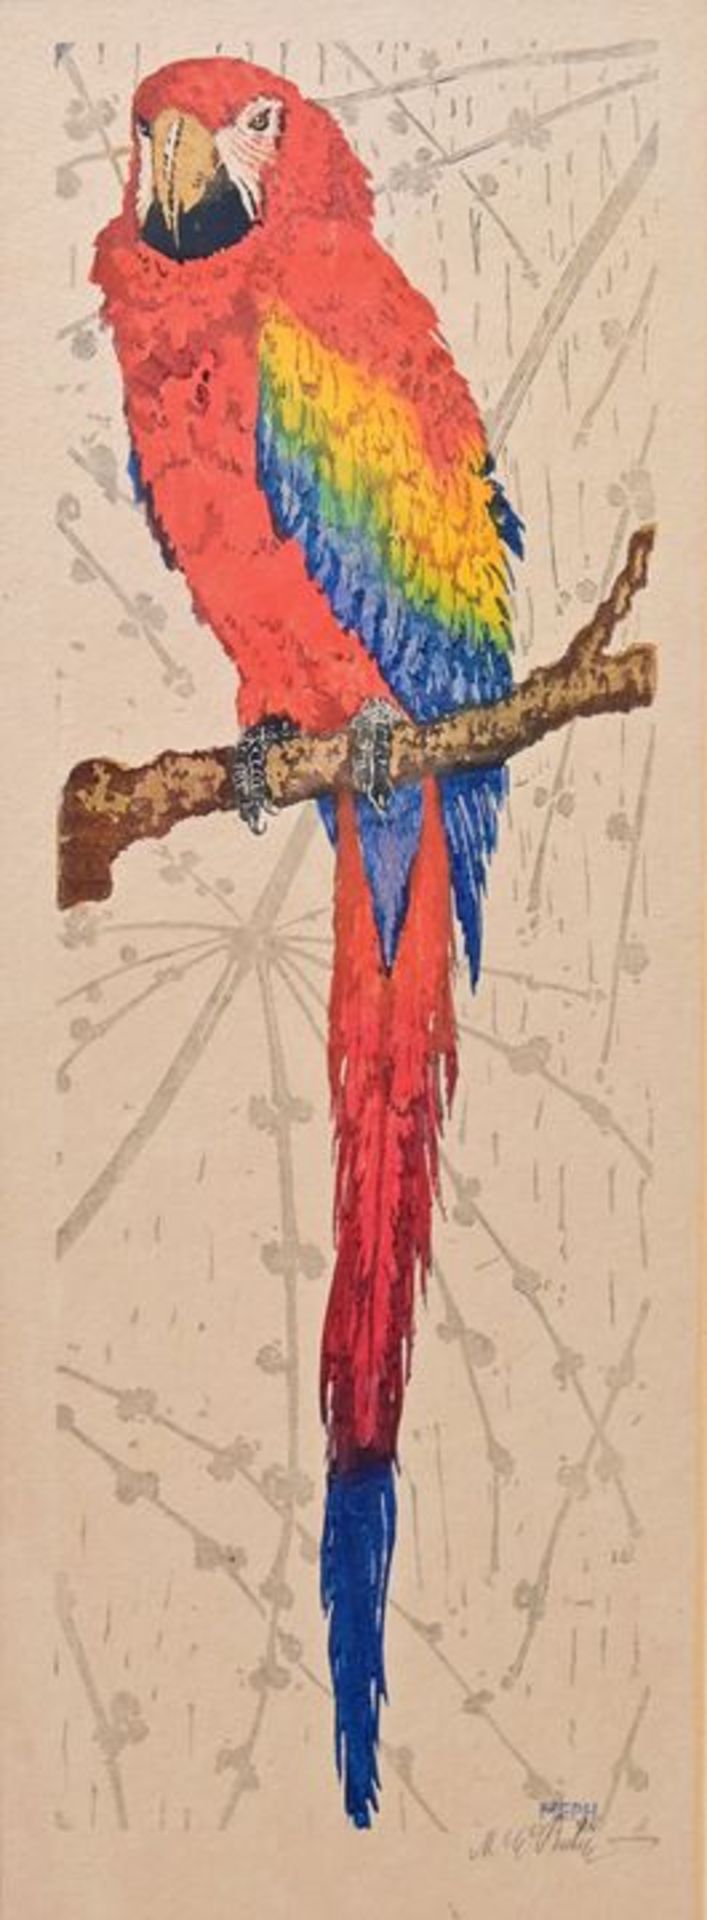 MEPH: Roter Ara/ parrot